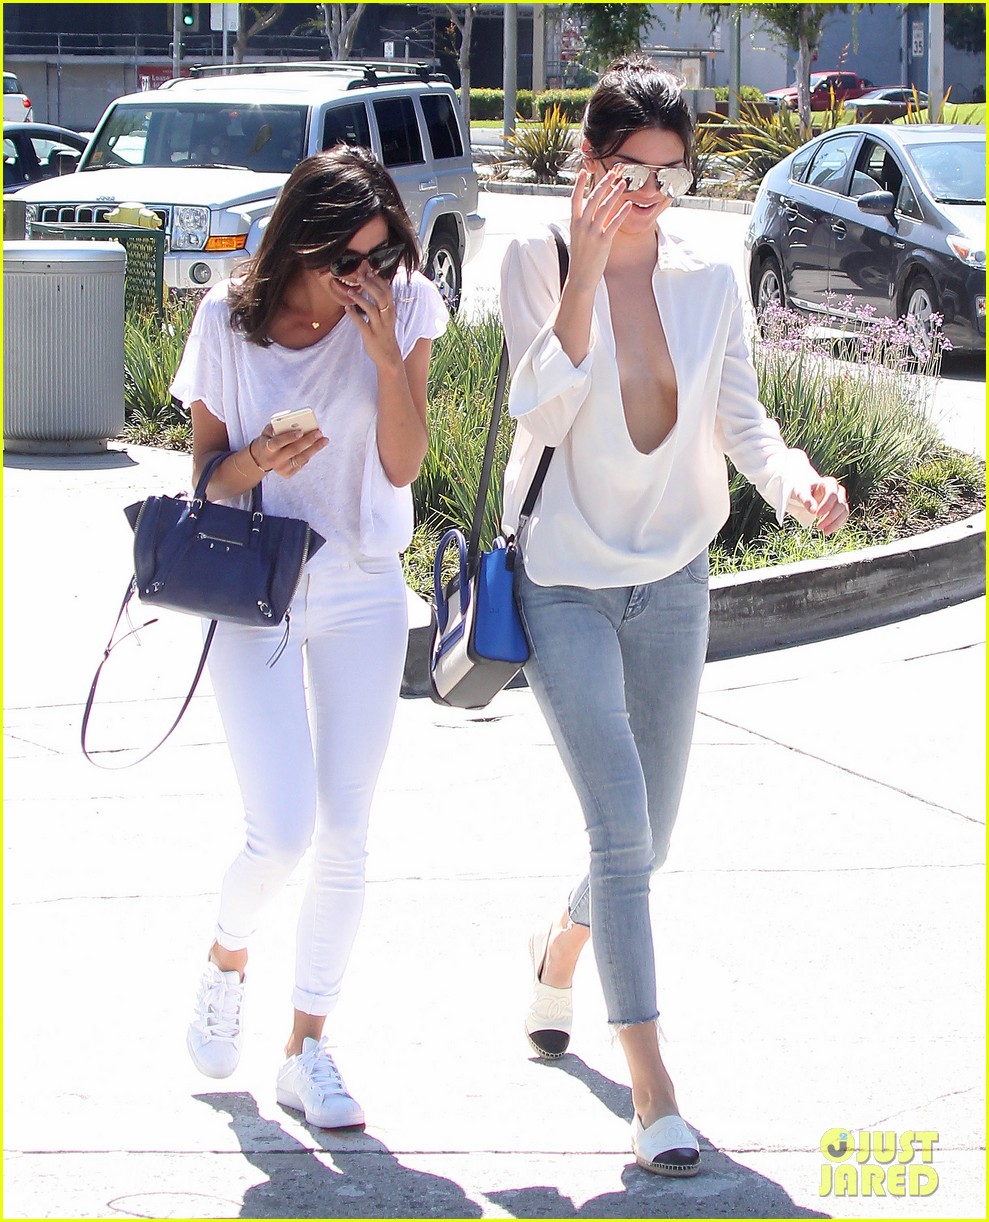 Kendall Jenner Narrowly Avoids Nip Slip in Super Low Cut Top: Photo 3416198, Kendall Jenner Photos